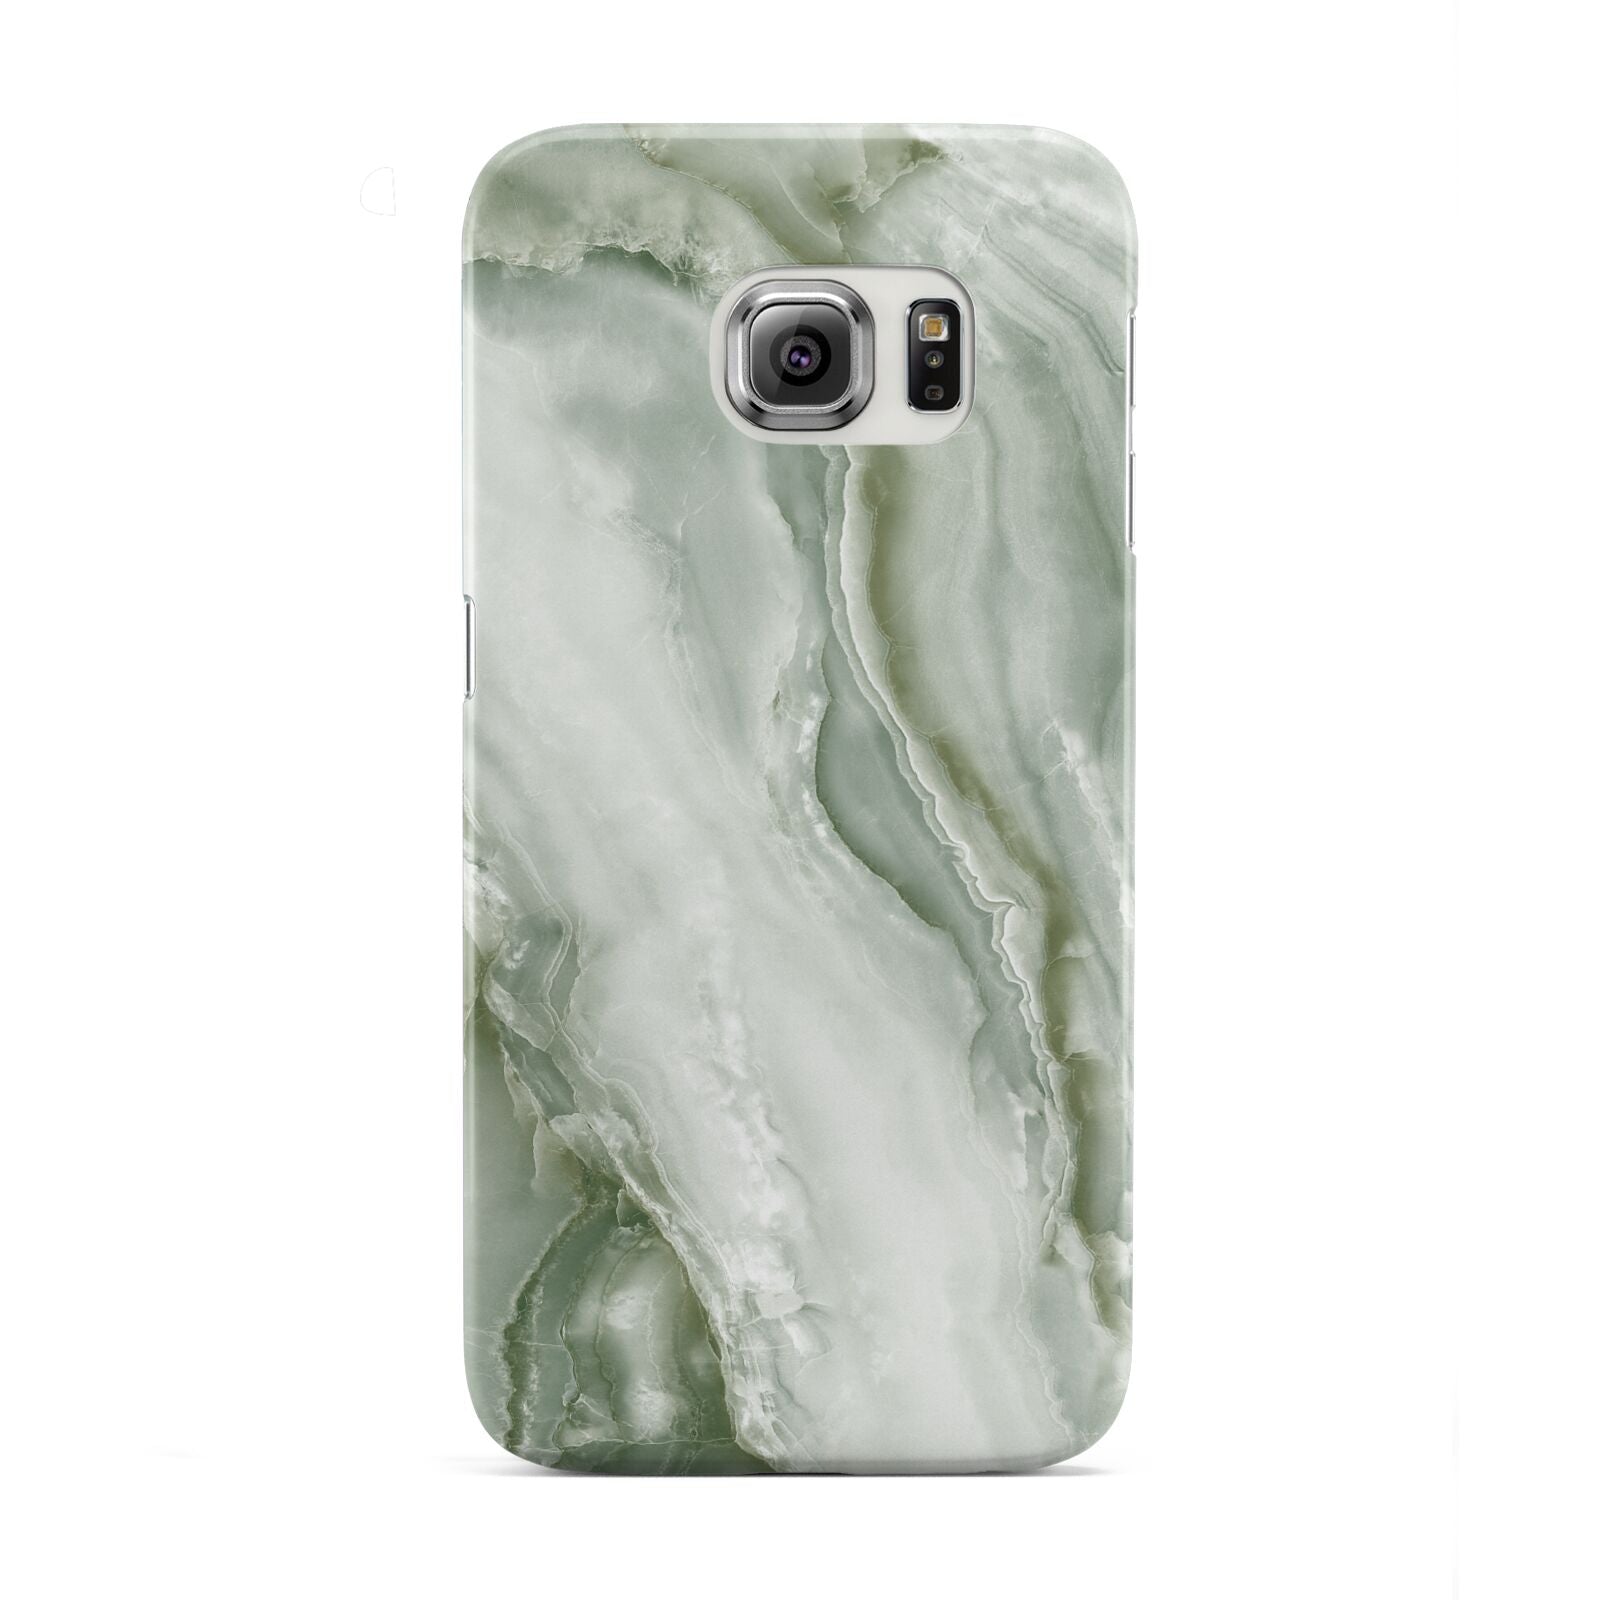 Pistachio Green Marble Samsung Galaxy S6 Edge Case